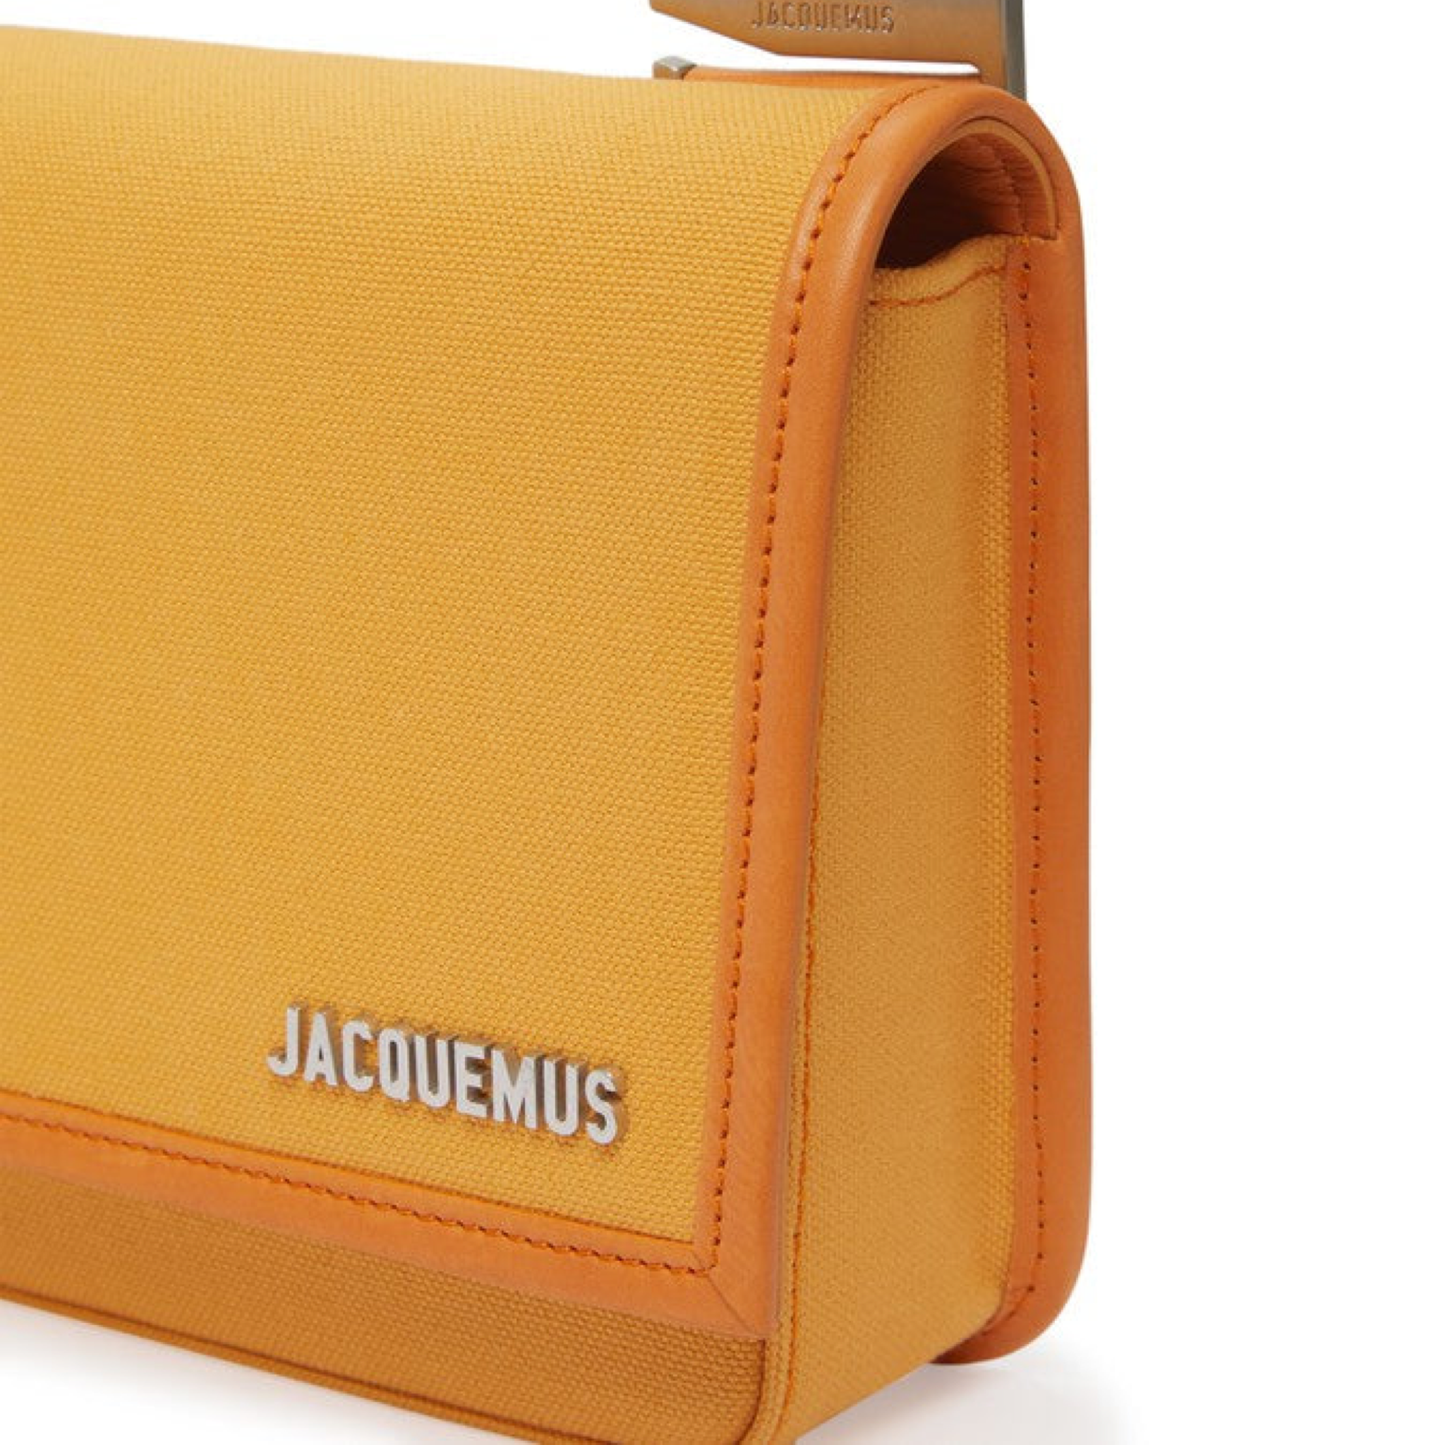 Jacquemus Orange Le Messageru Bag - DANYOUNGUK